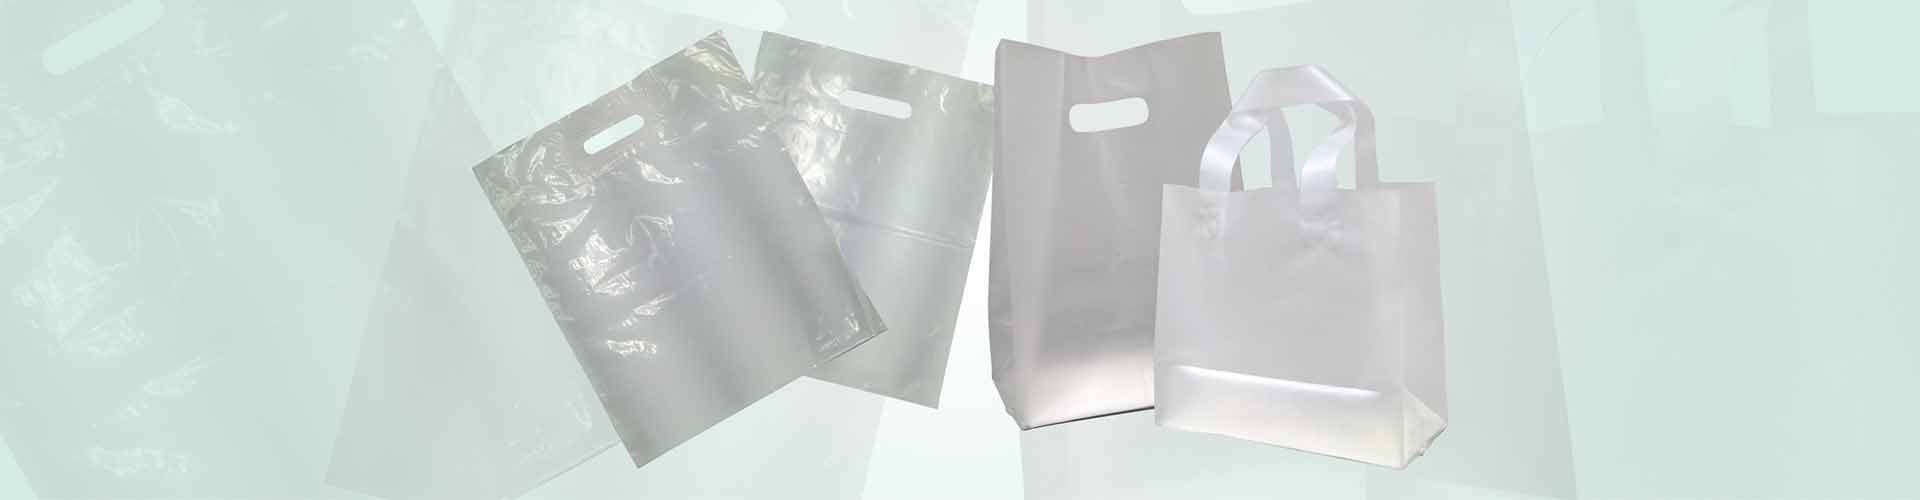 stock-plastic-bags